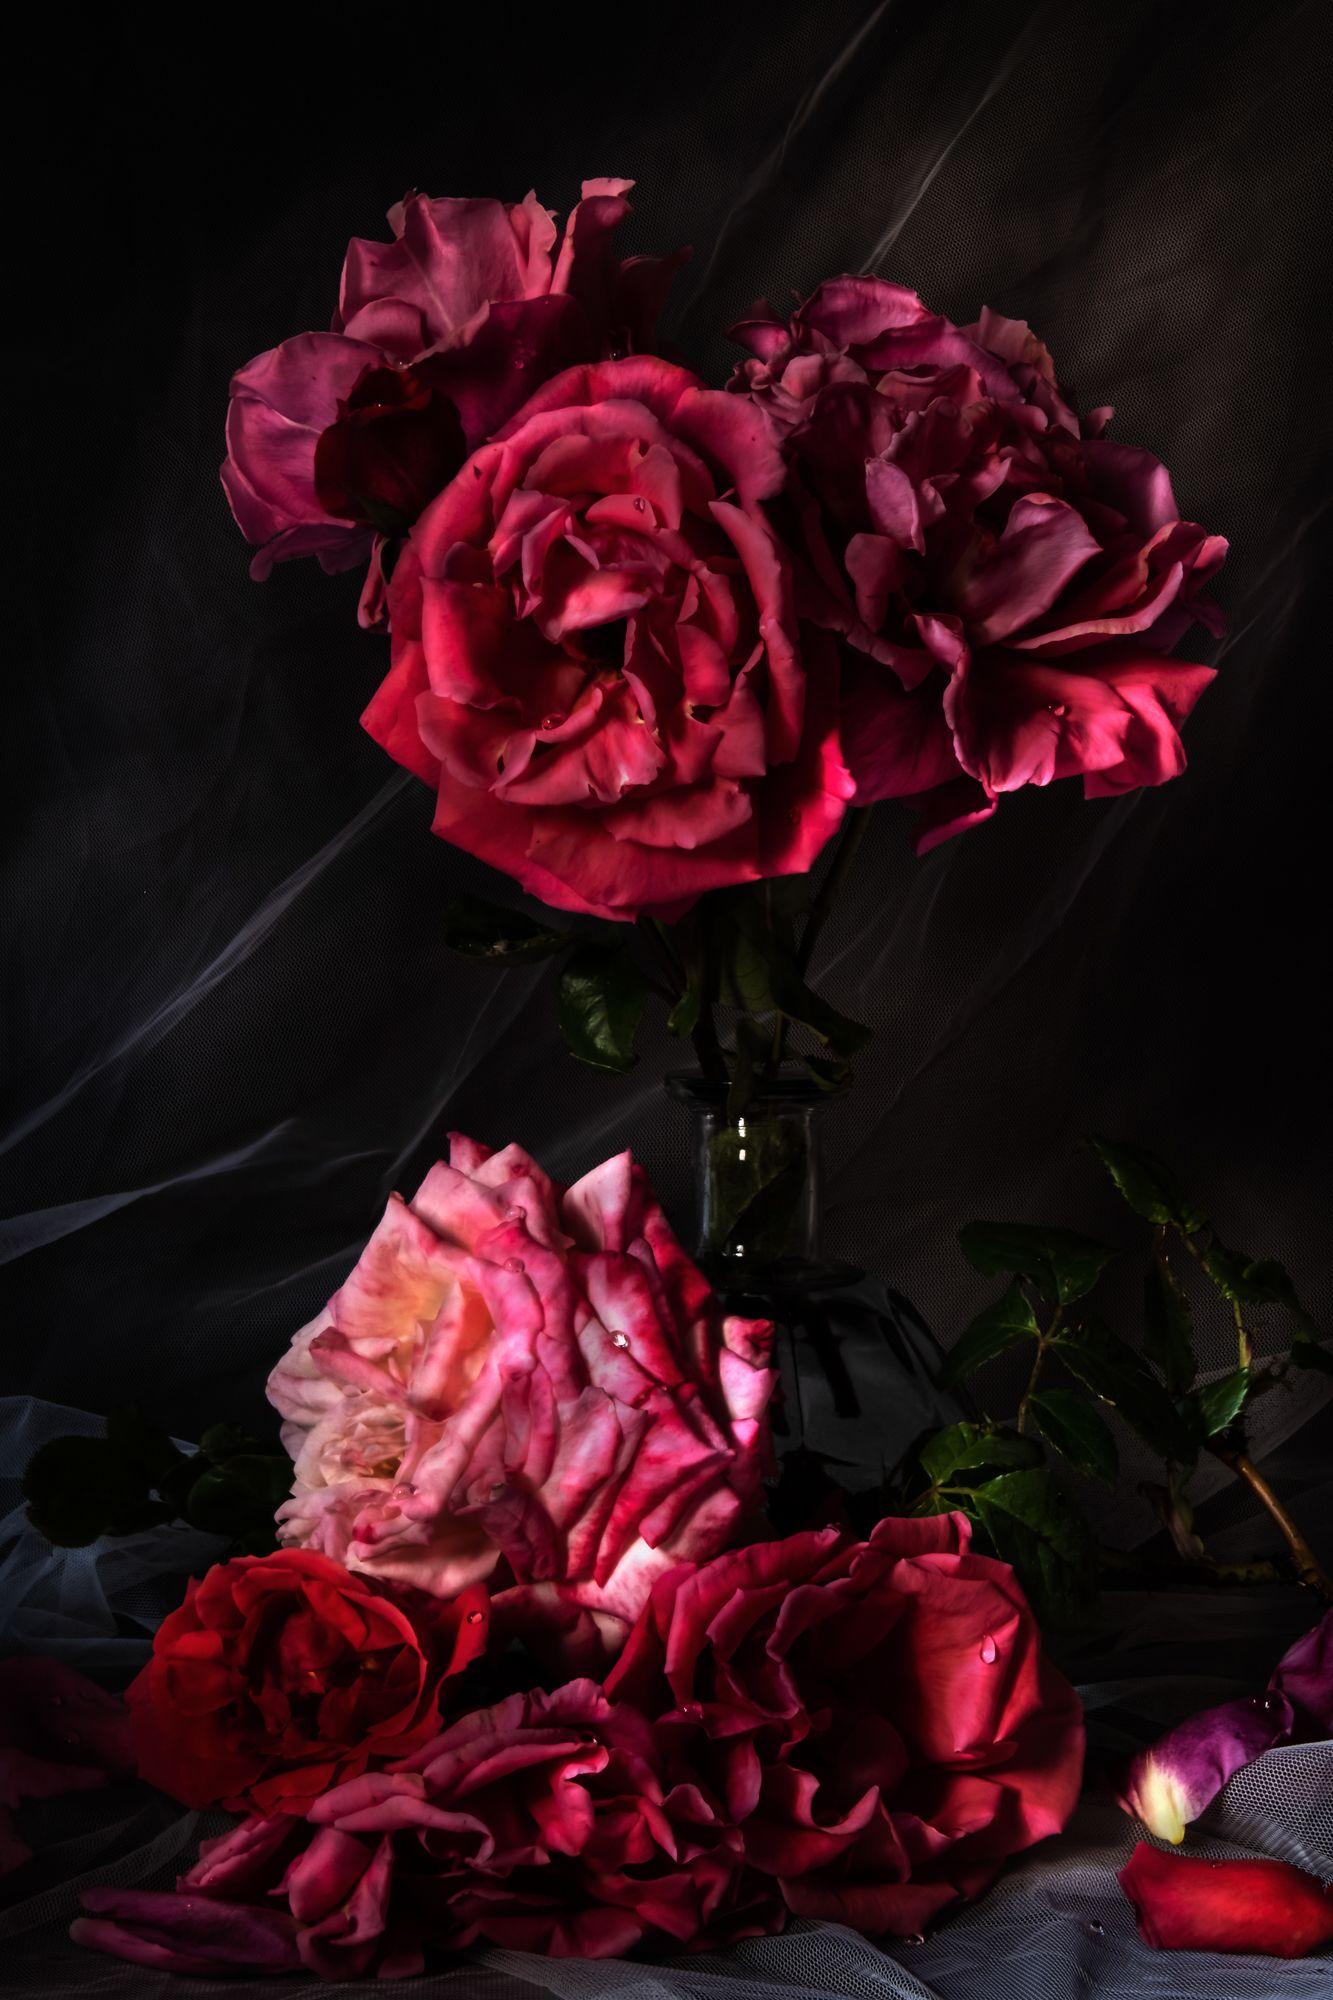 Sandra Platas Hernandez Color Photograph - Roses, Photograph, C-Type